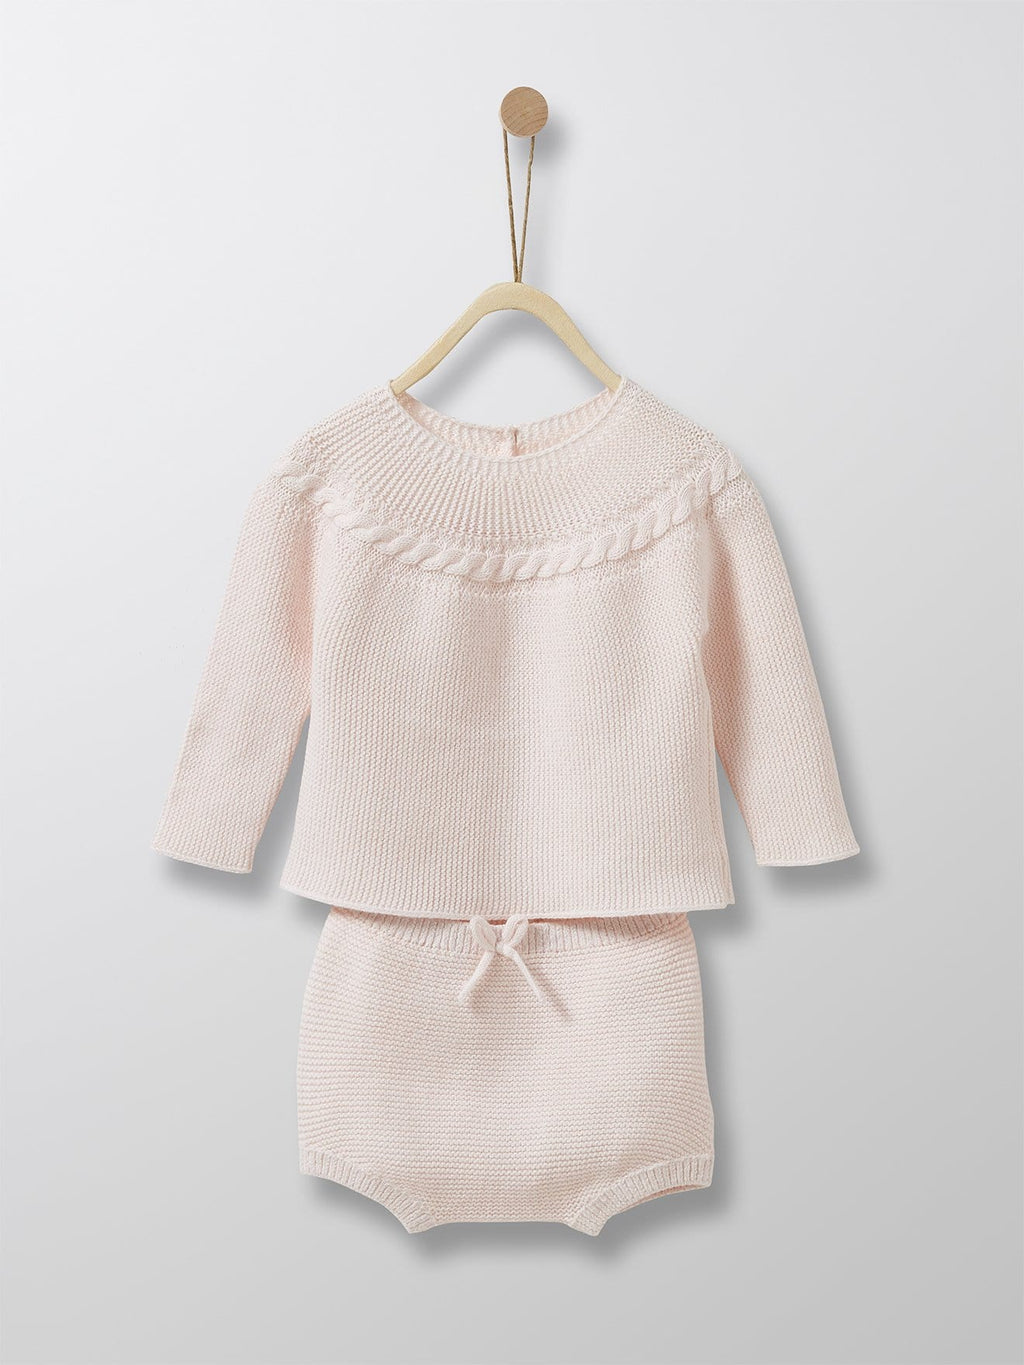 Cyrillus Paris | Sweater & Briefs Outfit for Newborn | 100% Organic Cotton | 1M, 3M